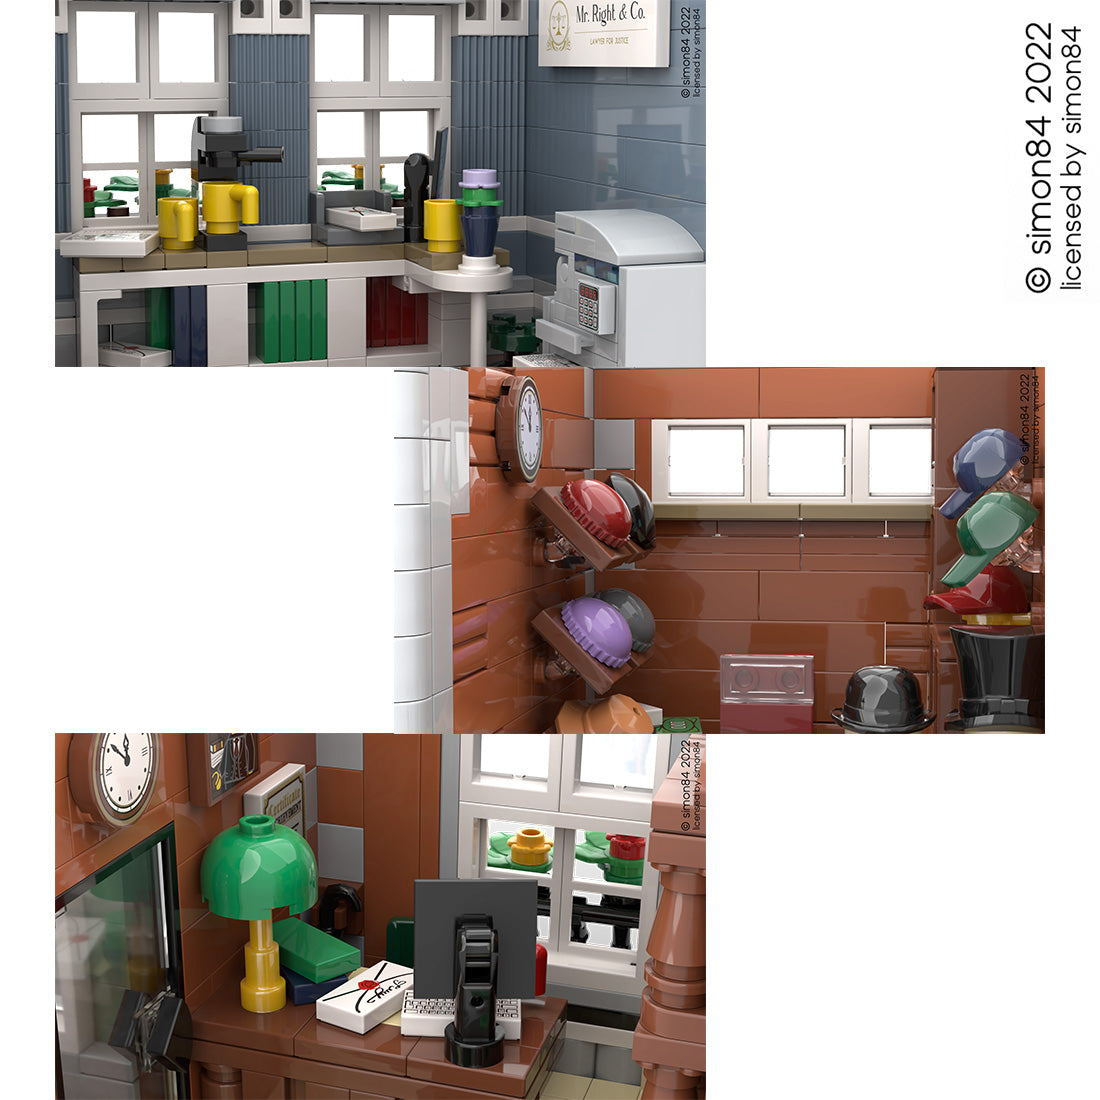 MOC-113849 Street Scene Toy Shop Modular Building